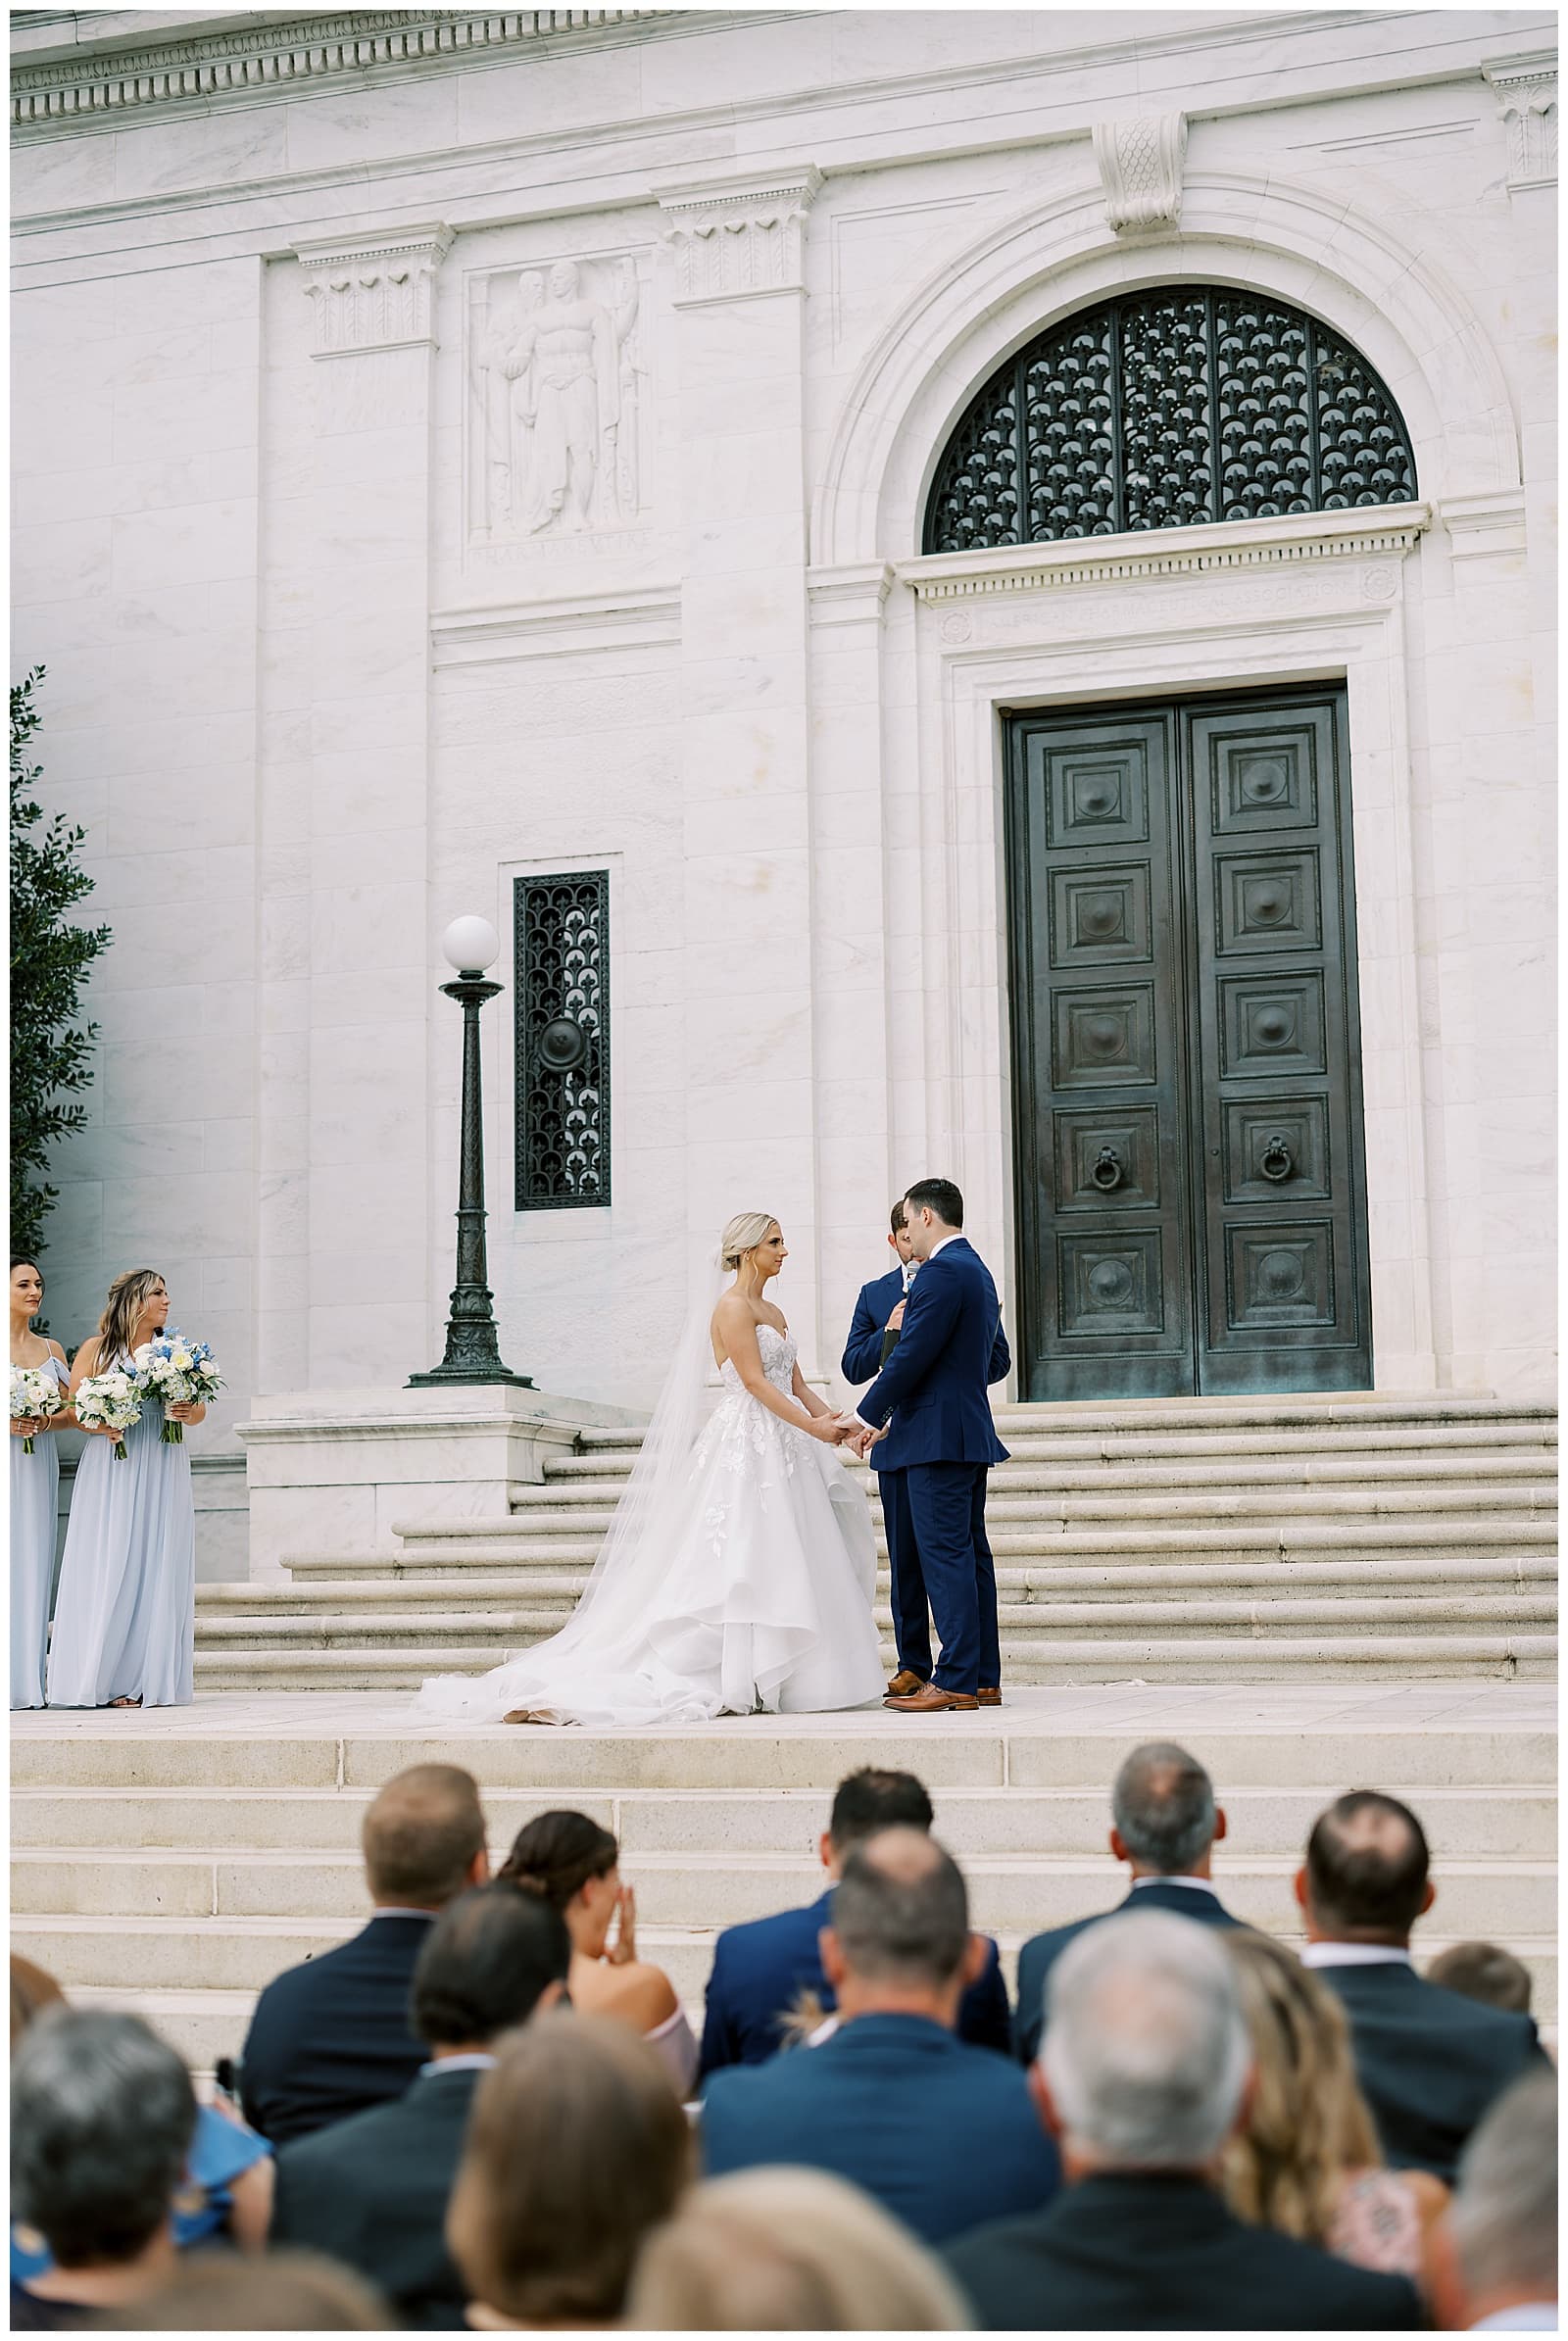 Danielle-Defayette-Photography-potomac-view-terrace-wedding-dc_0014.jpg